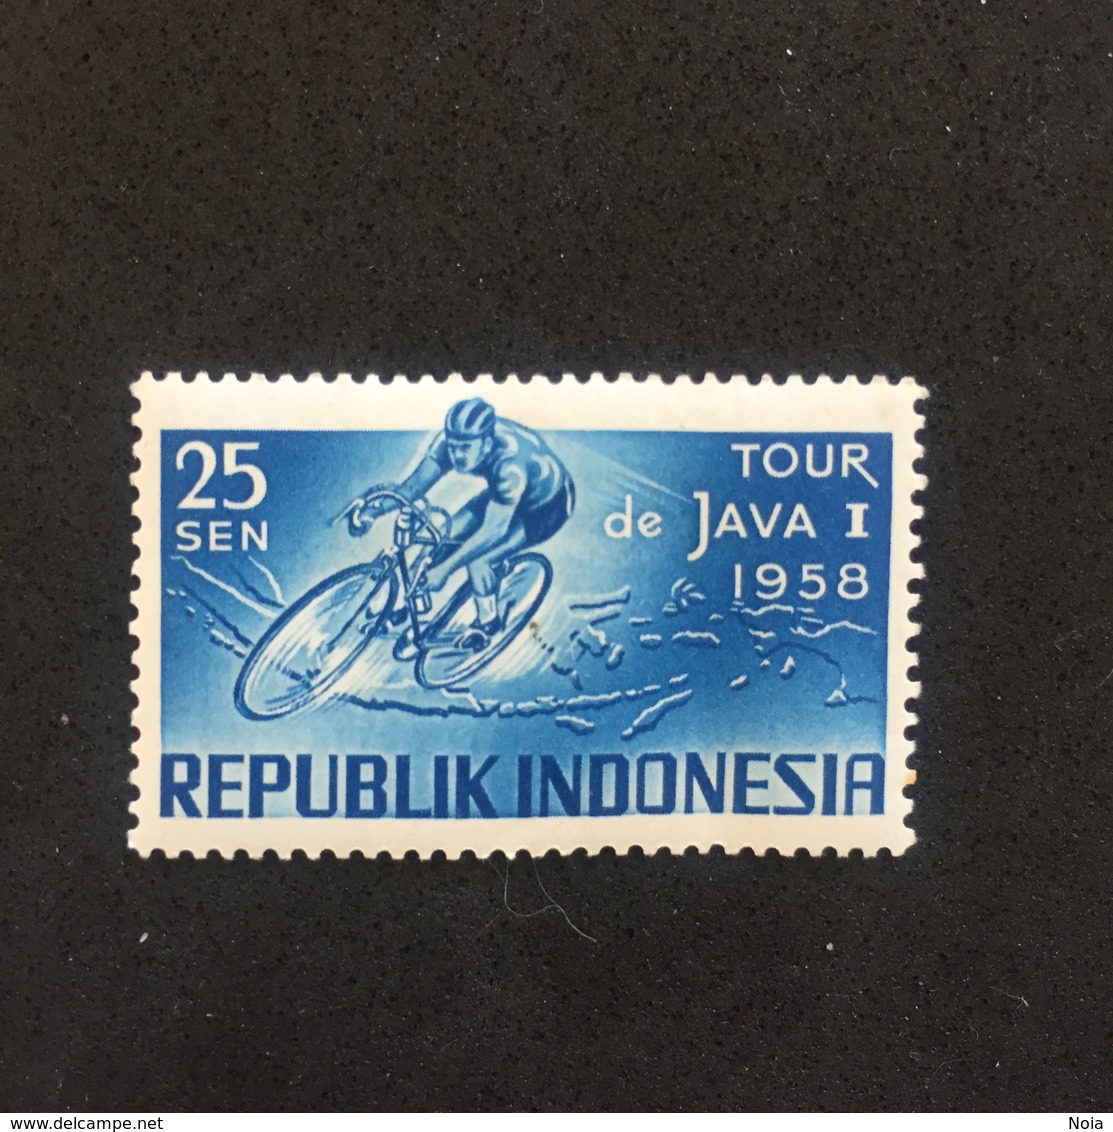 INDONESIA. JAVA TOUR 1958. MNH. C3703A - Ciclismo